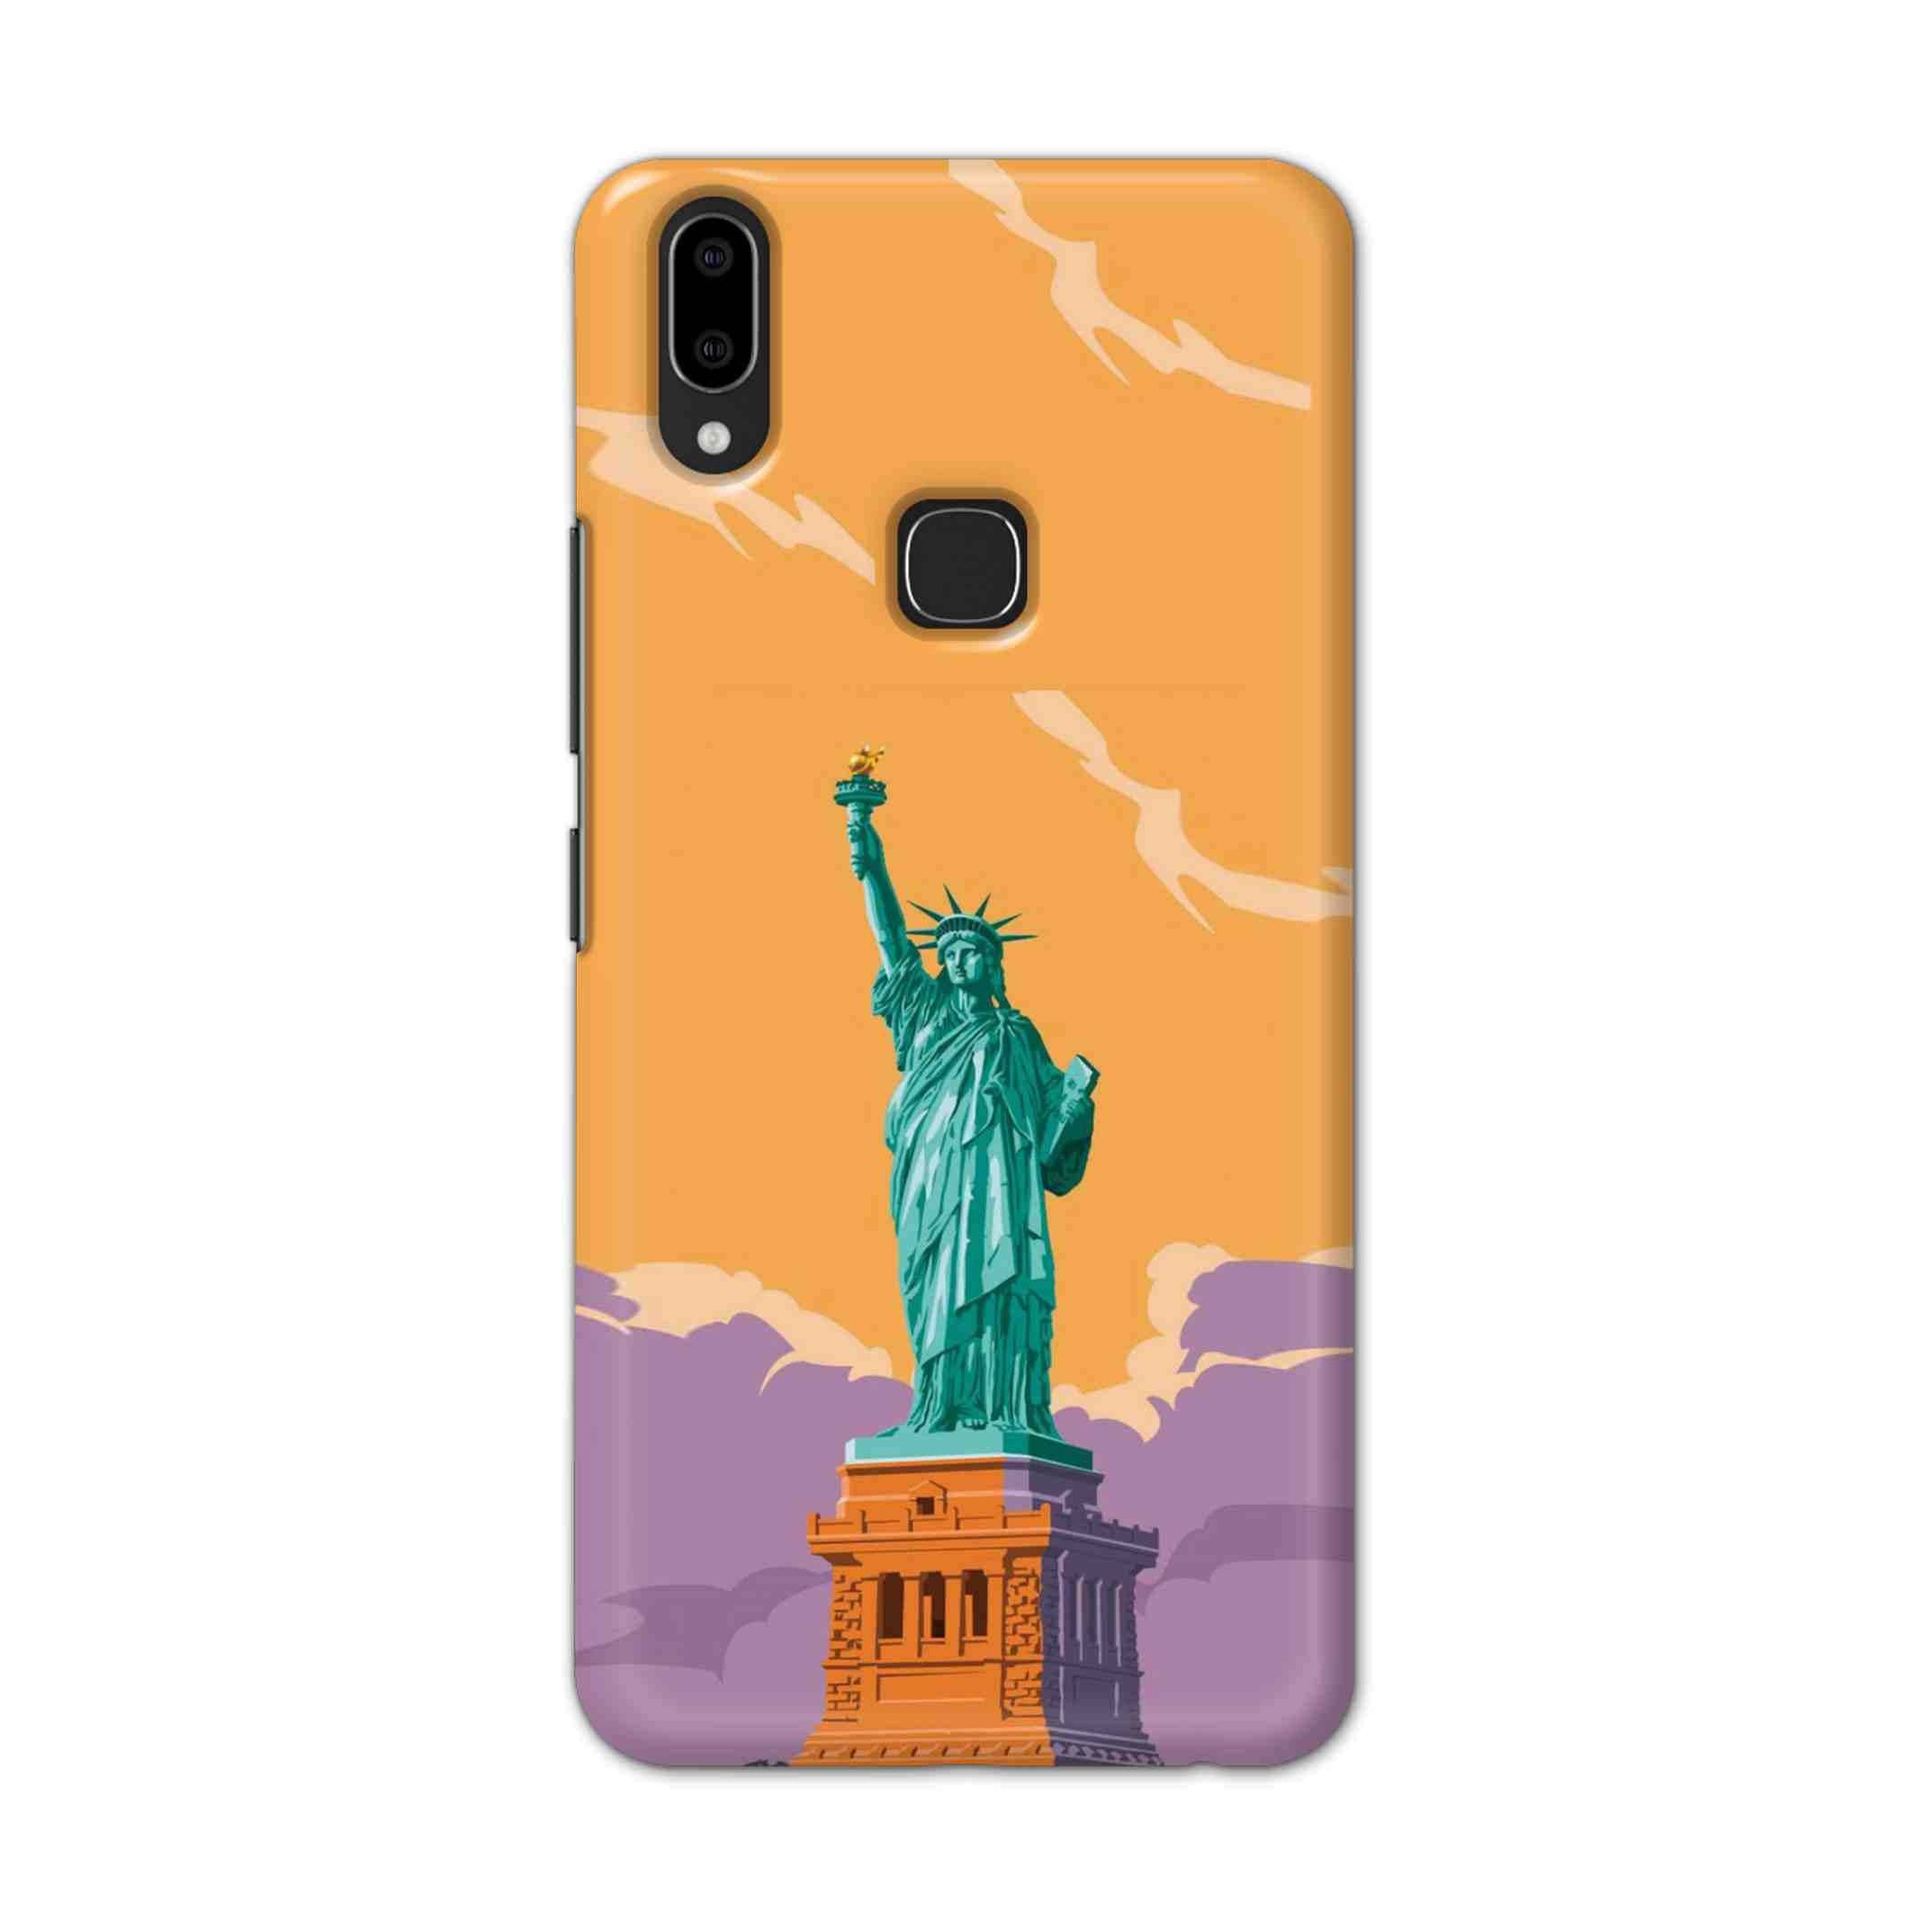 Buy Statue Of Liberty Hard Back Mobile Phone Case Cover For Vivo V9 / V9 Youth Online